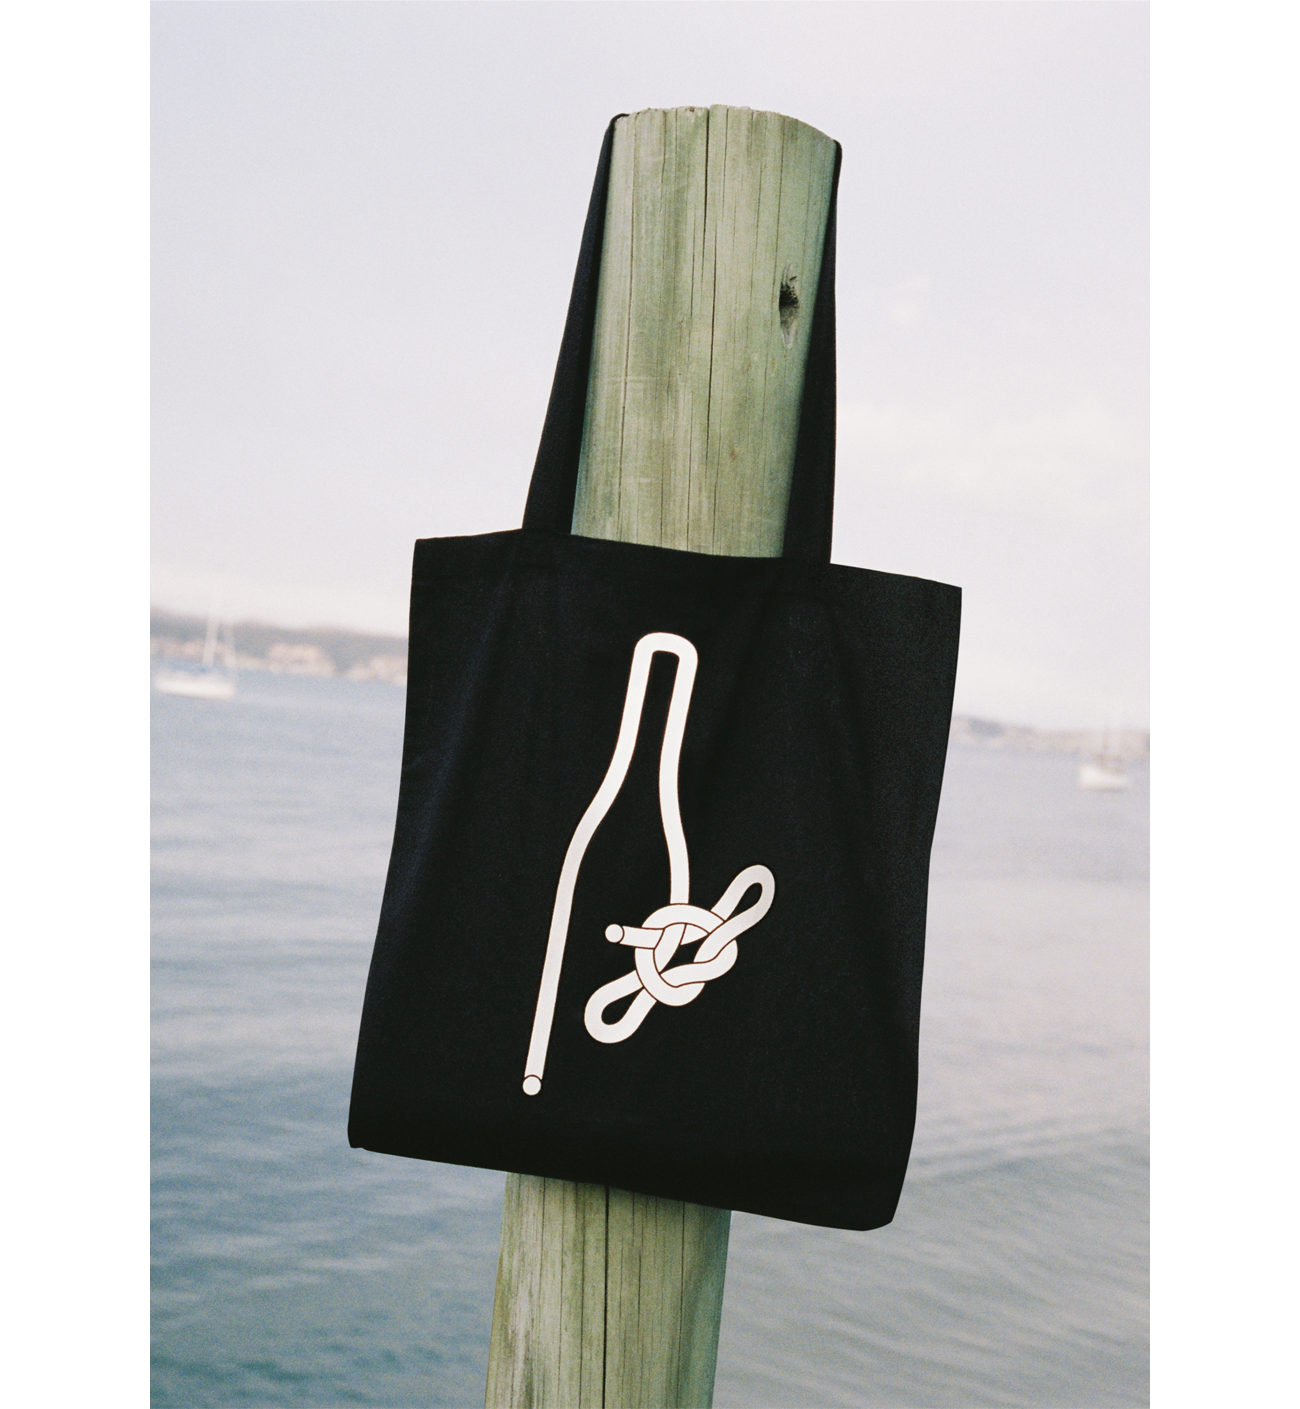 lost-art-loose-ends-natural-wine-branding-merchandise-bag-photography-chris-hopkins